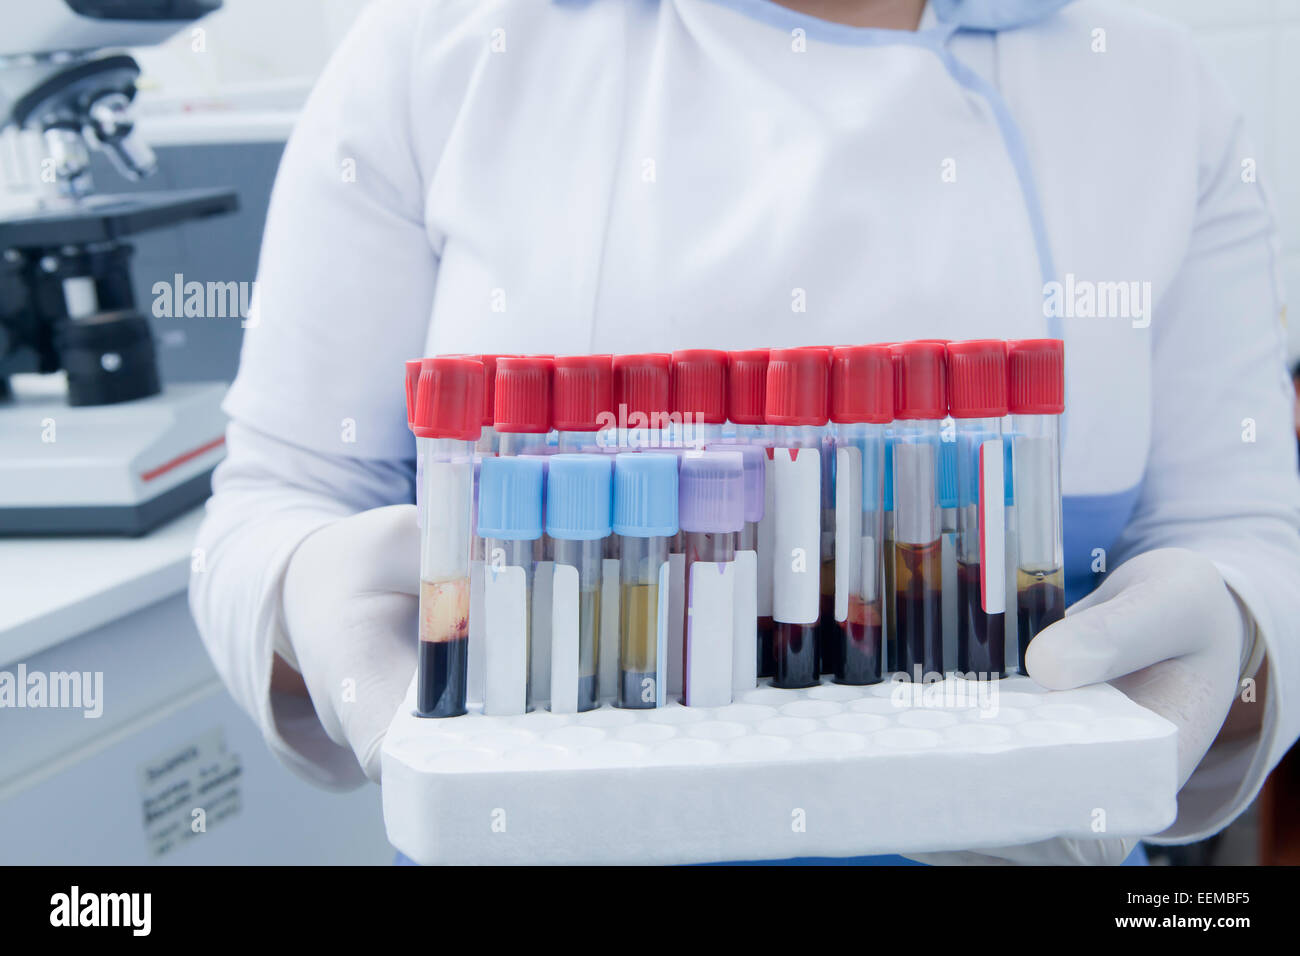 Hispanic scientist holding blood samples in test tube rack in laboratory Stock Photo